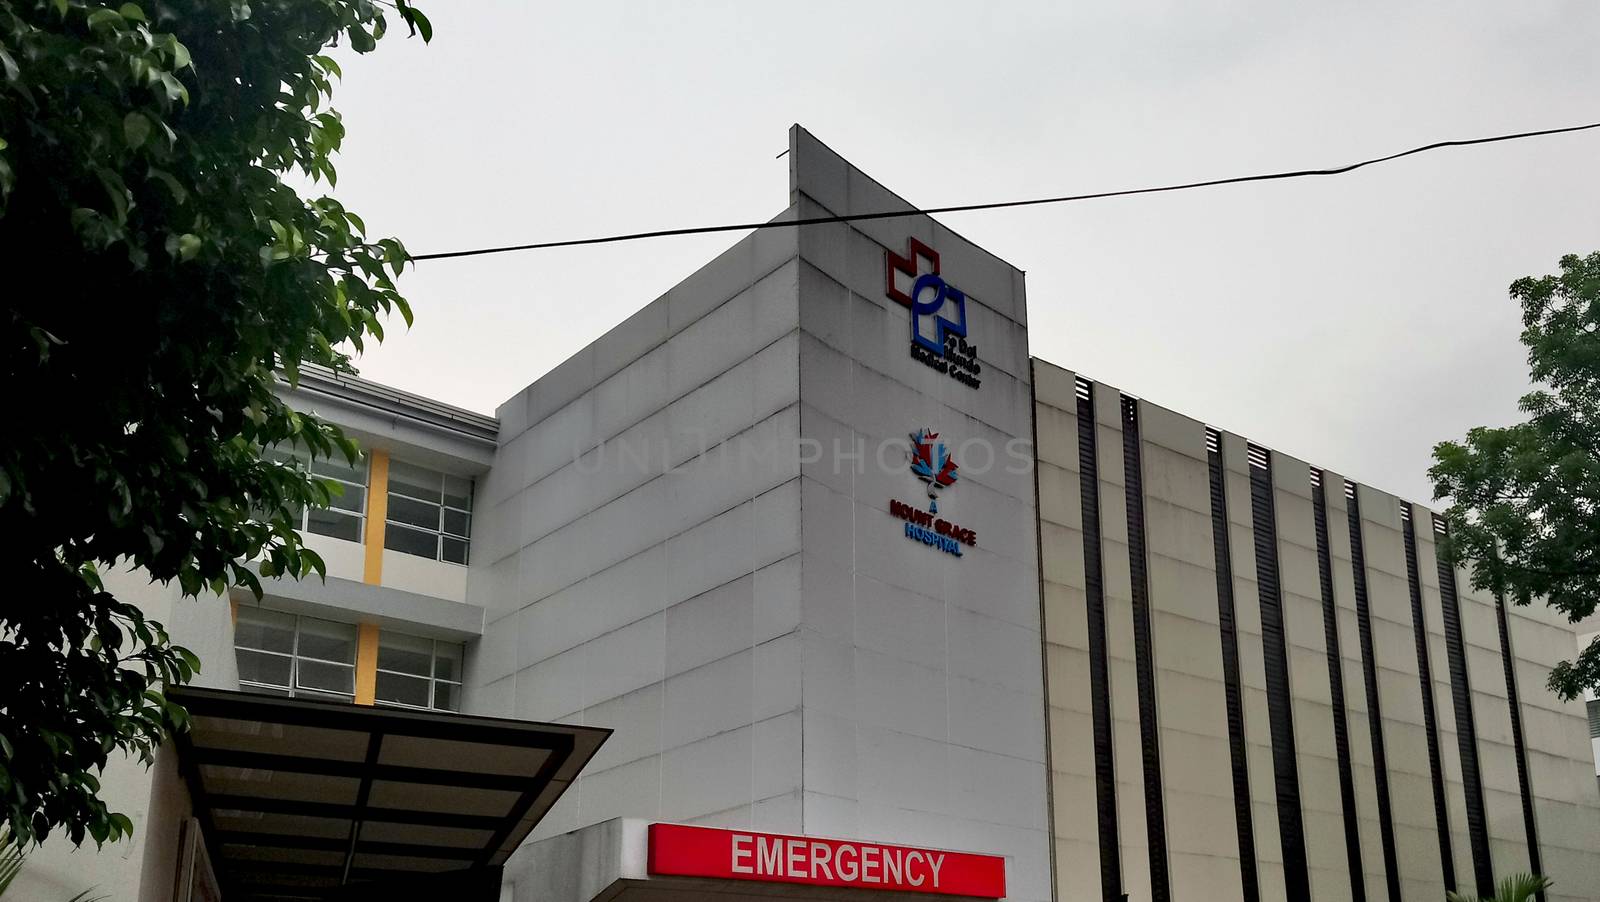 Fe Del Mundo Medical Center hospital facade in Quezon City, Phil by imwaltersy